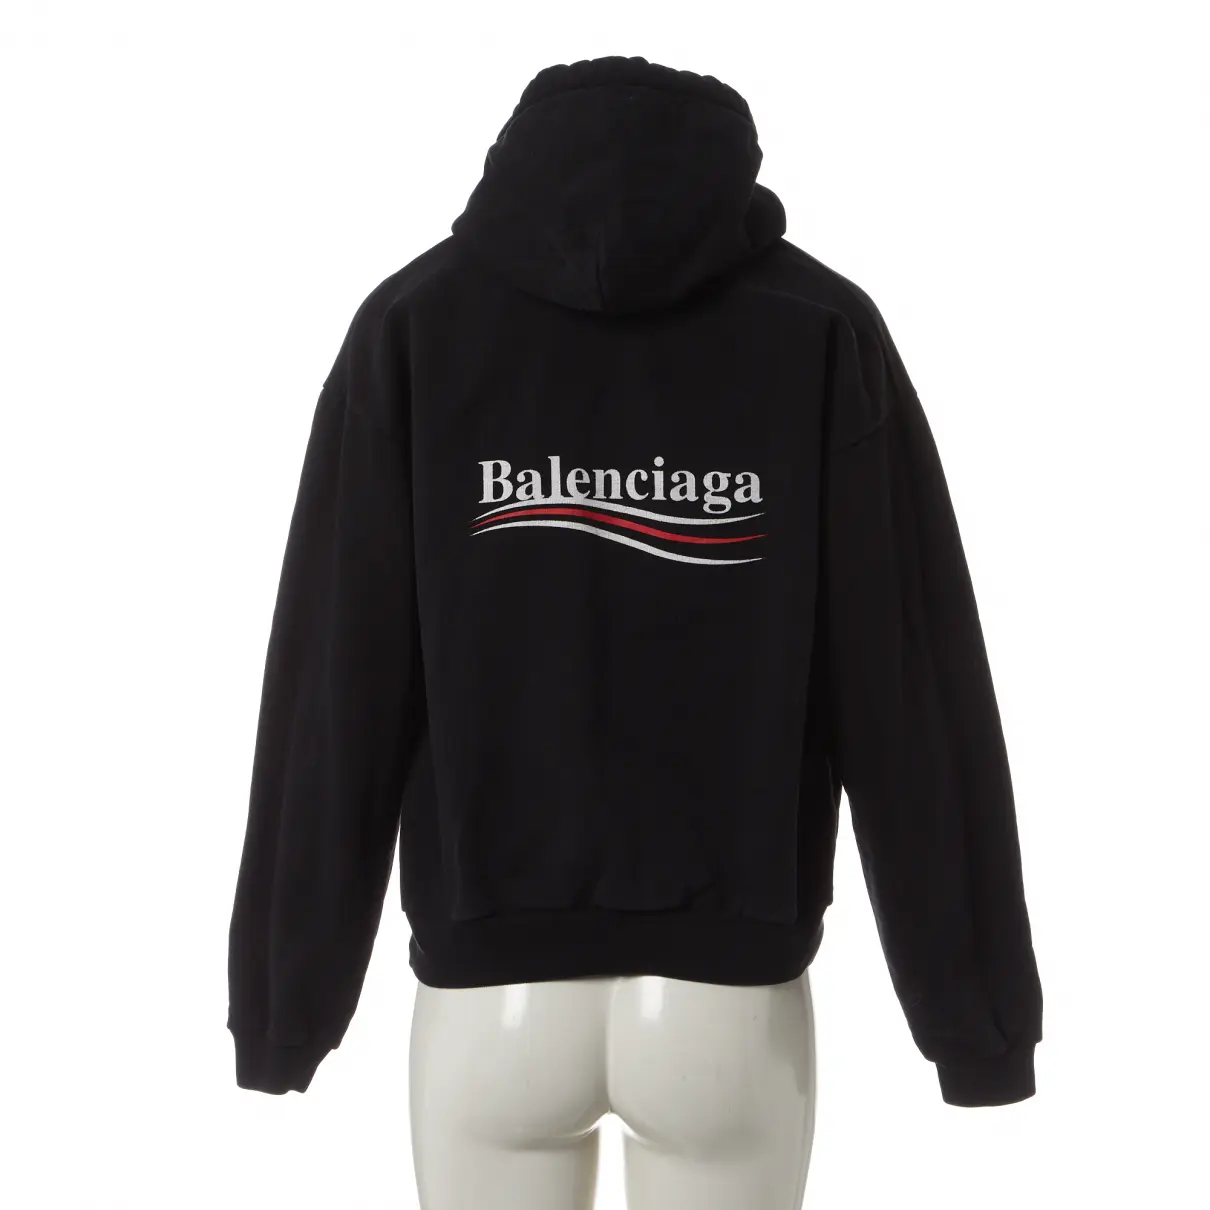 Buy Balenciaga Black Cotton Knitwear & Sweatshirt online